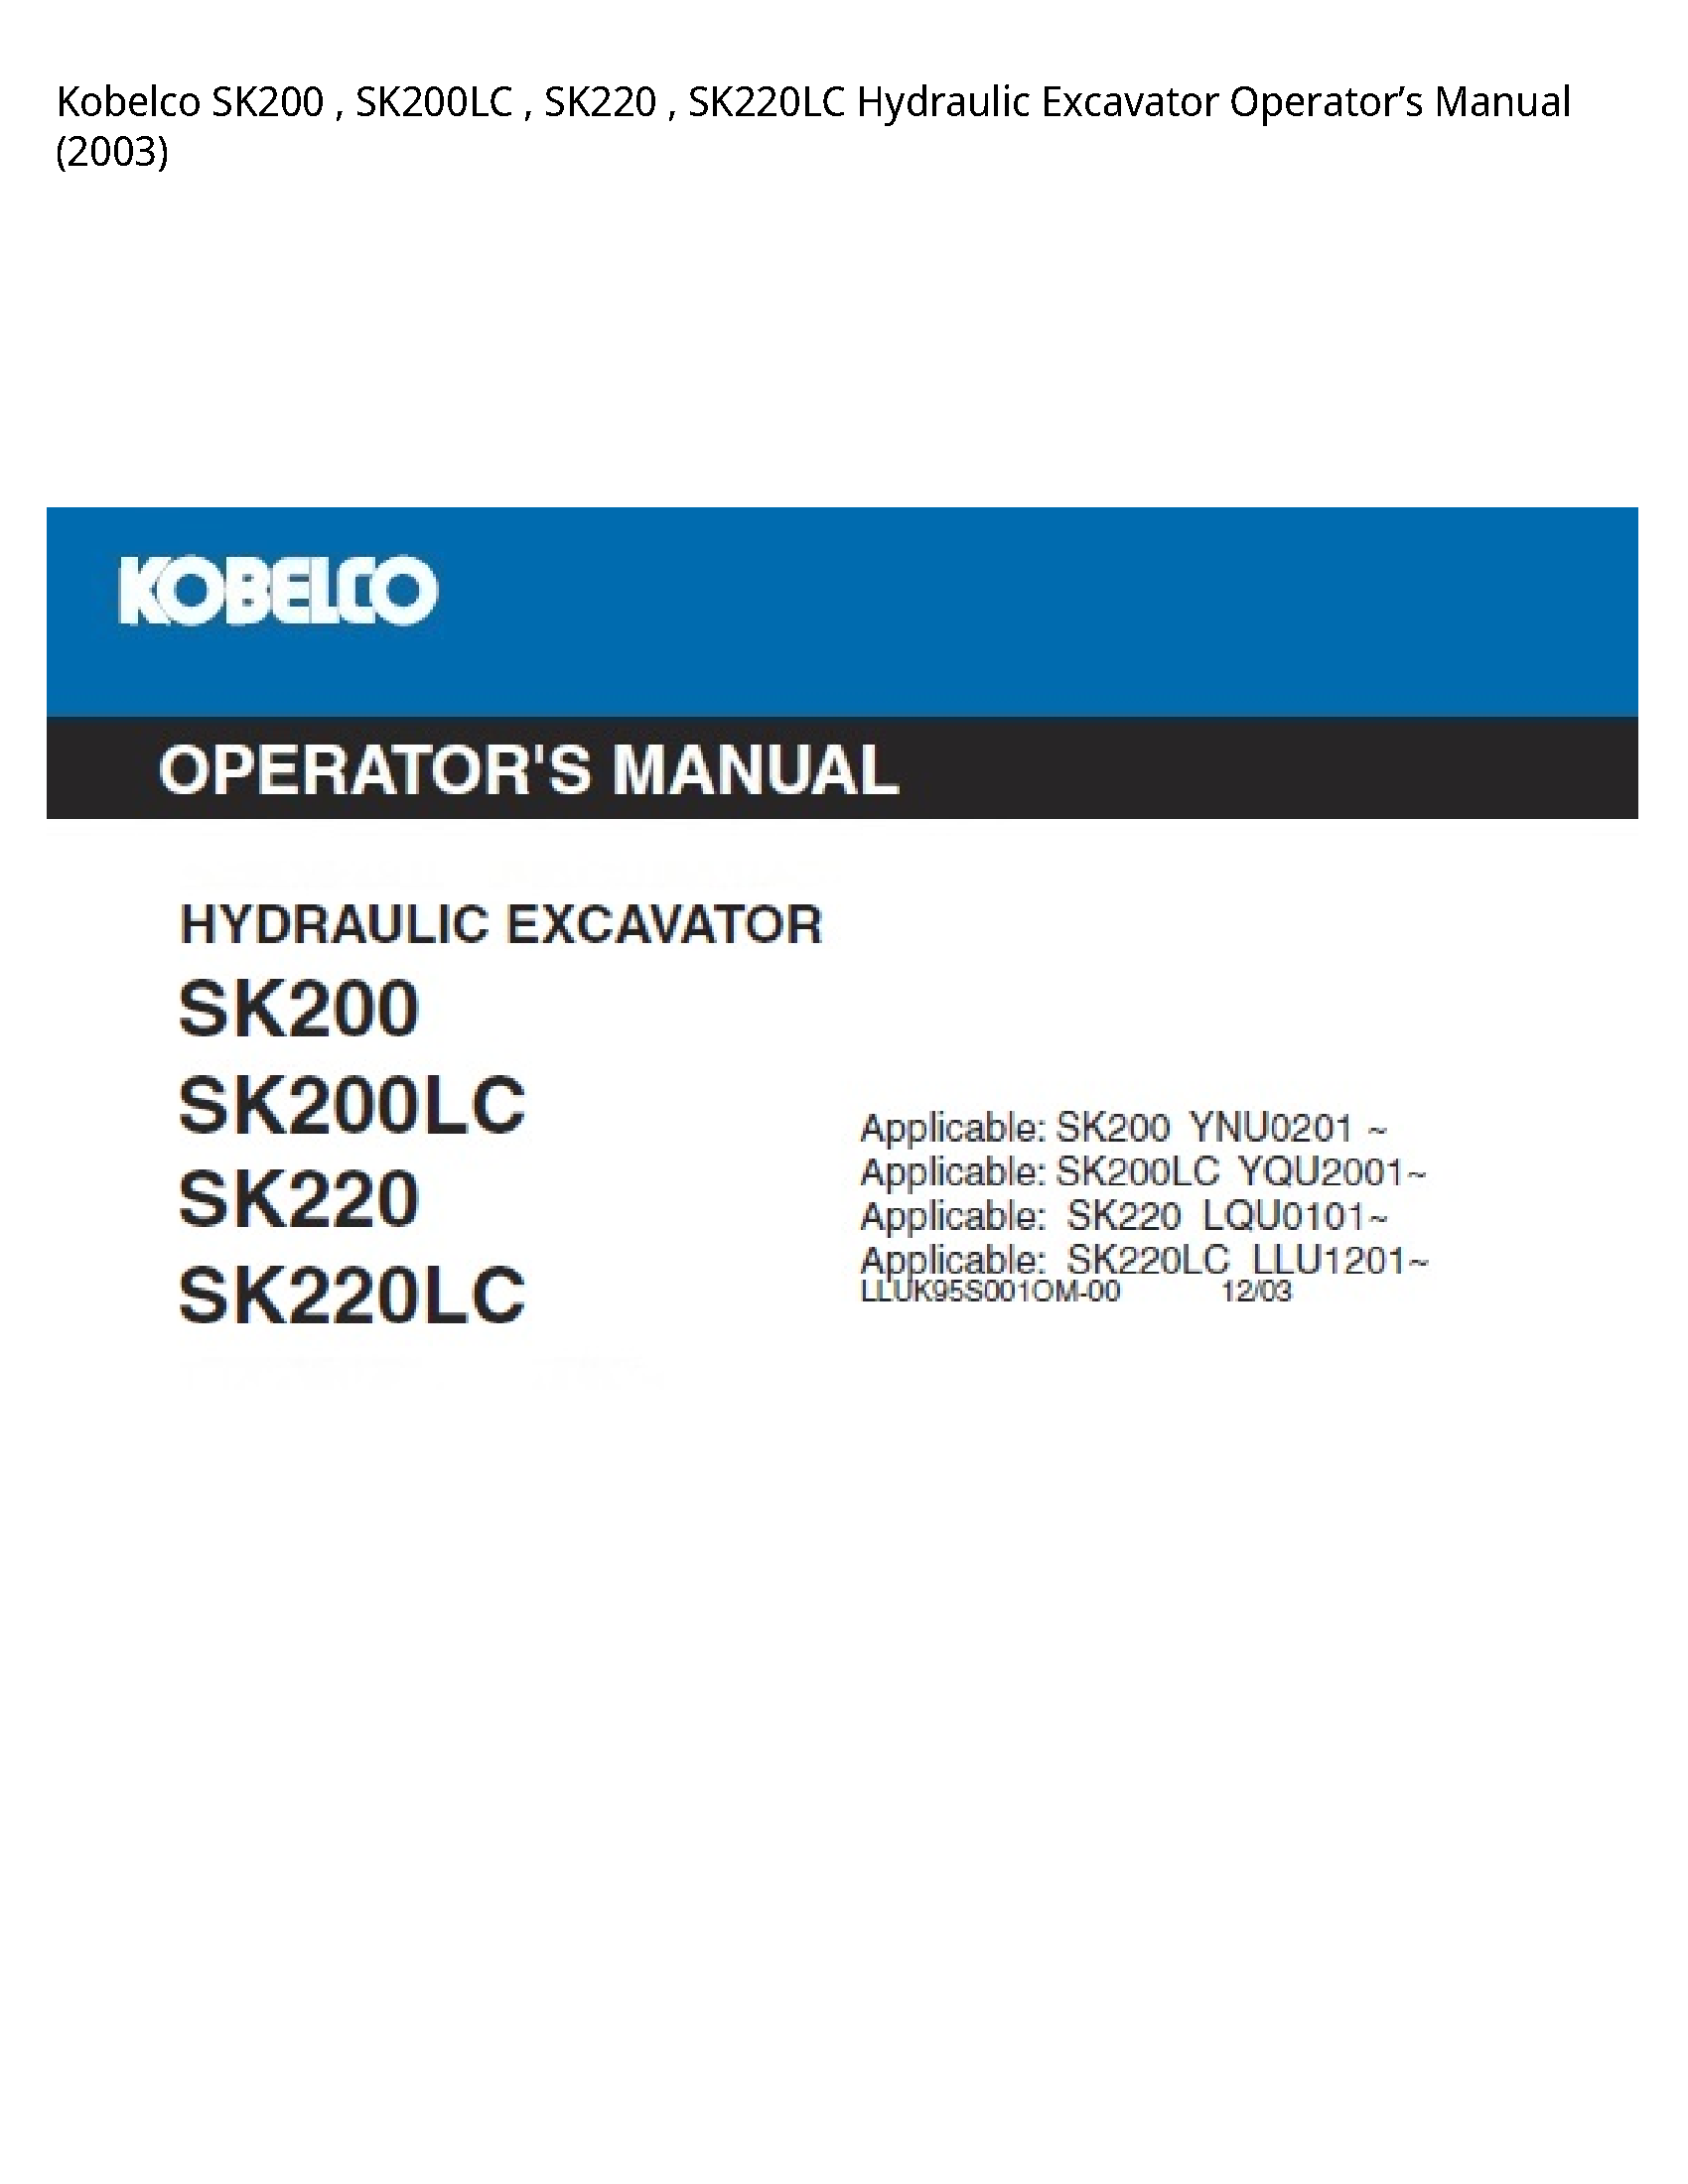 Kobelco SK200 Hydraulic Excavator Operator’s manual